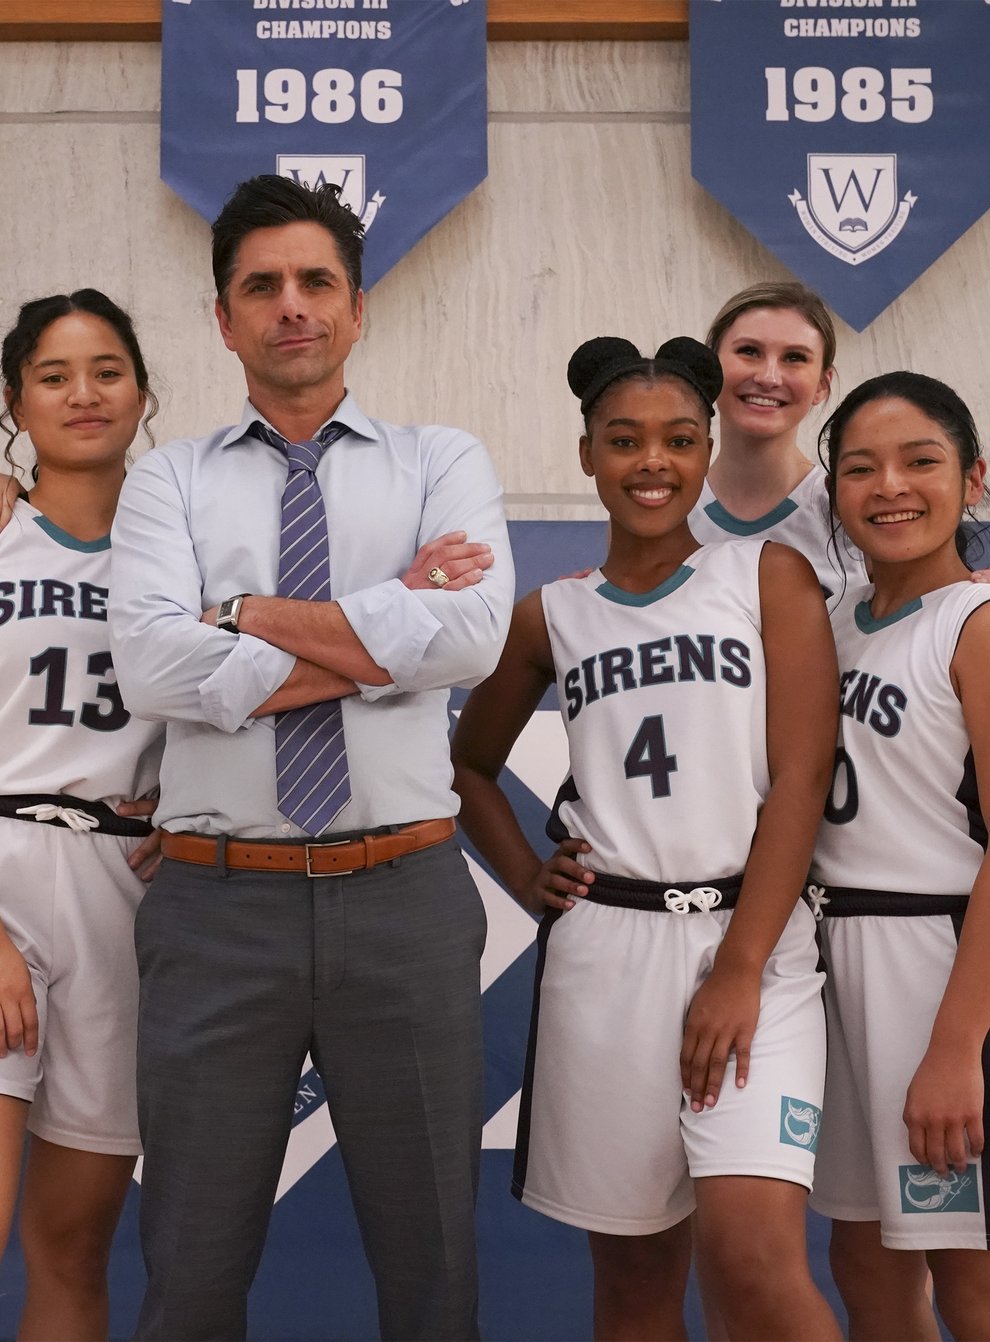 John Stamos with women's basketball team